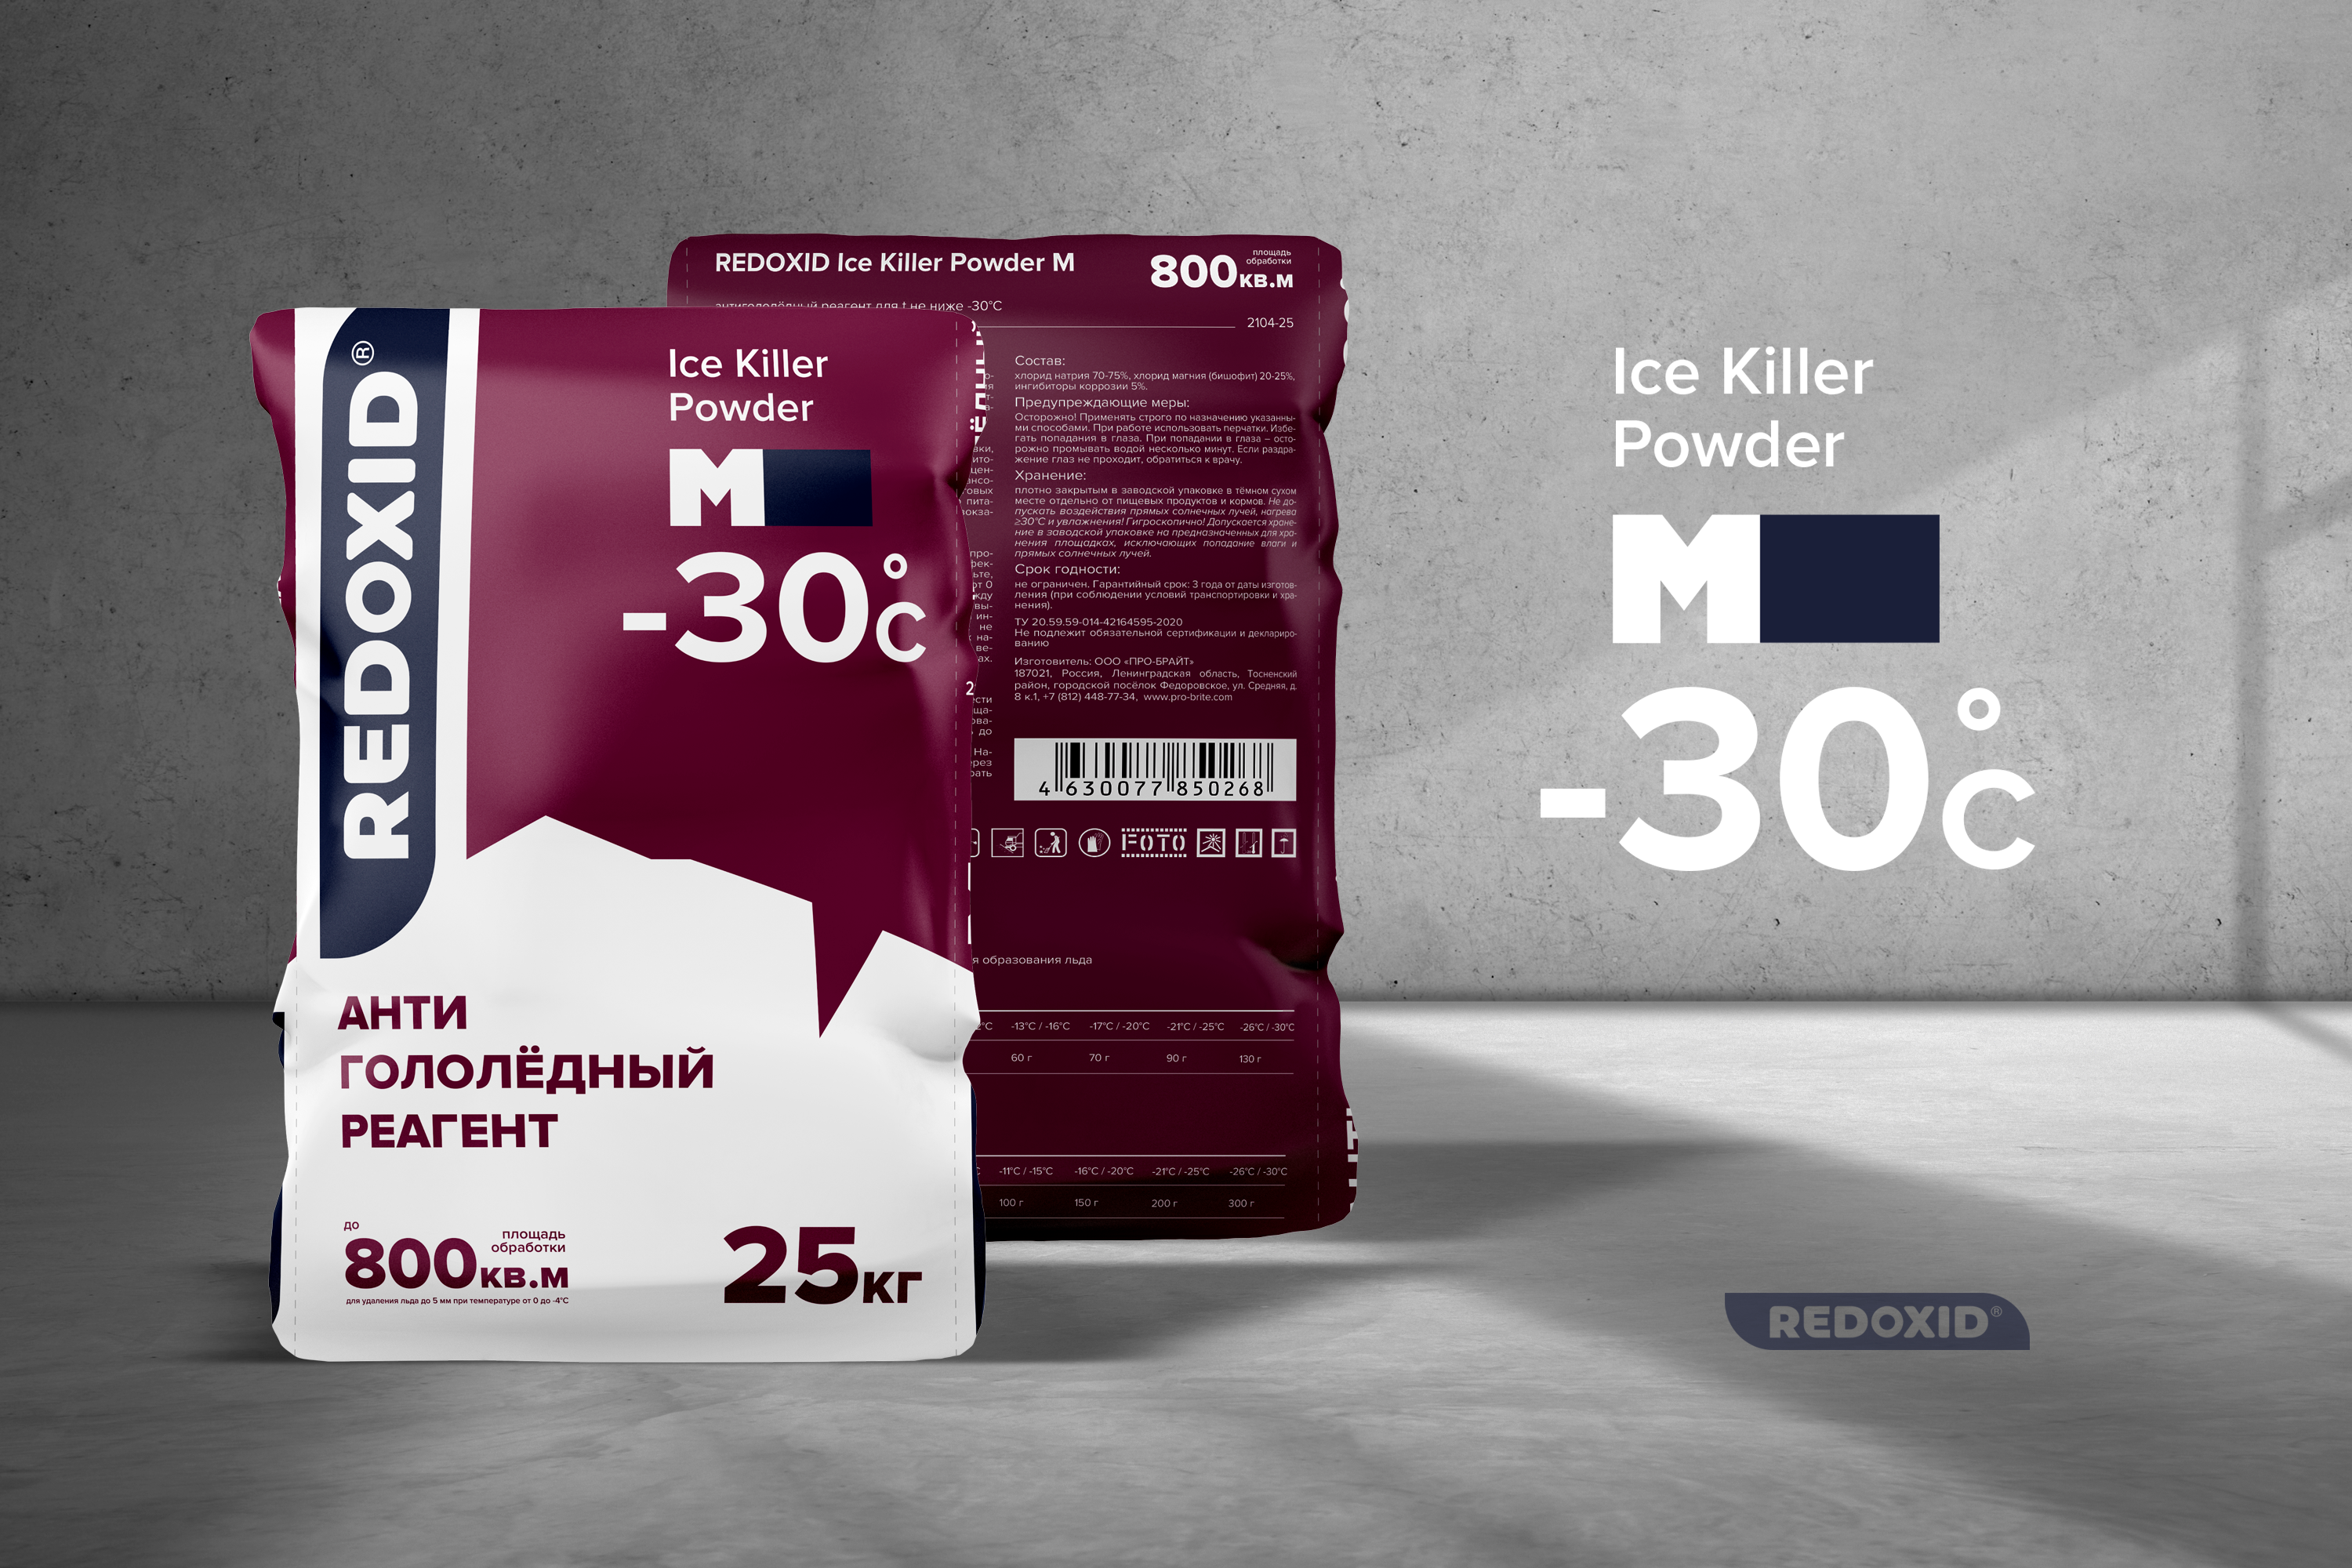 Powder killer. Антигололедный реагент - 30 °c, 25кг. Redoxid реагент. Противогололедный реагент "Ice Killer" -7°c 25кг. Антигололед реагент Pro-Brite.